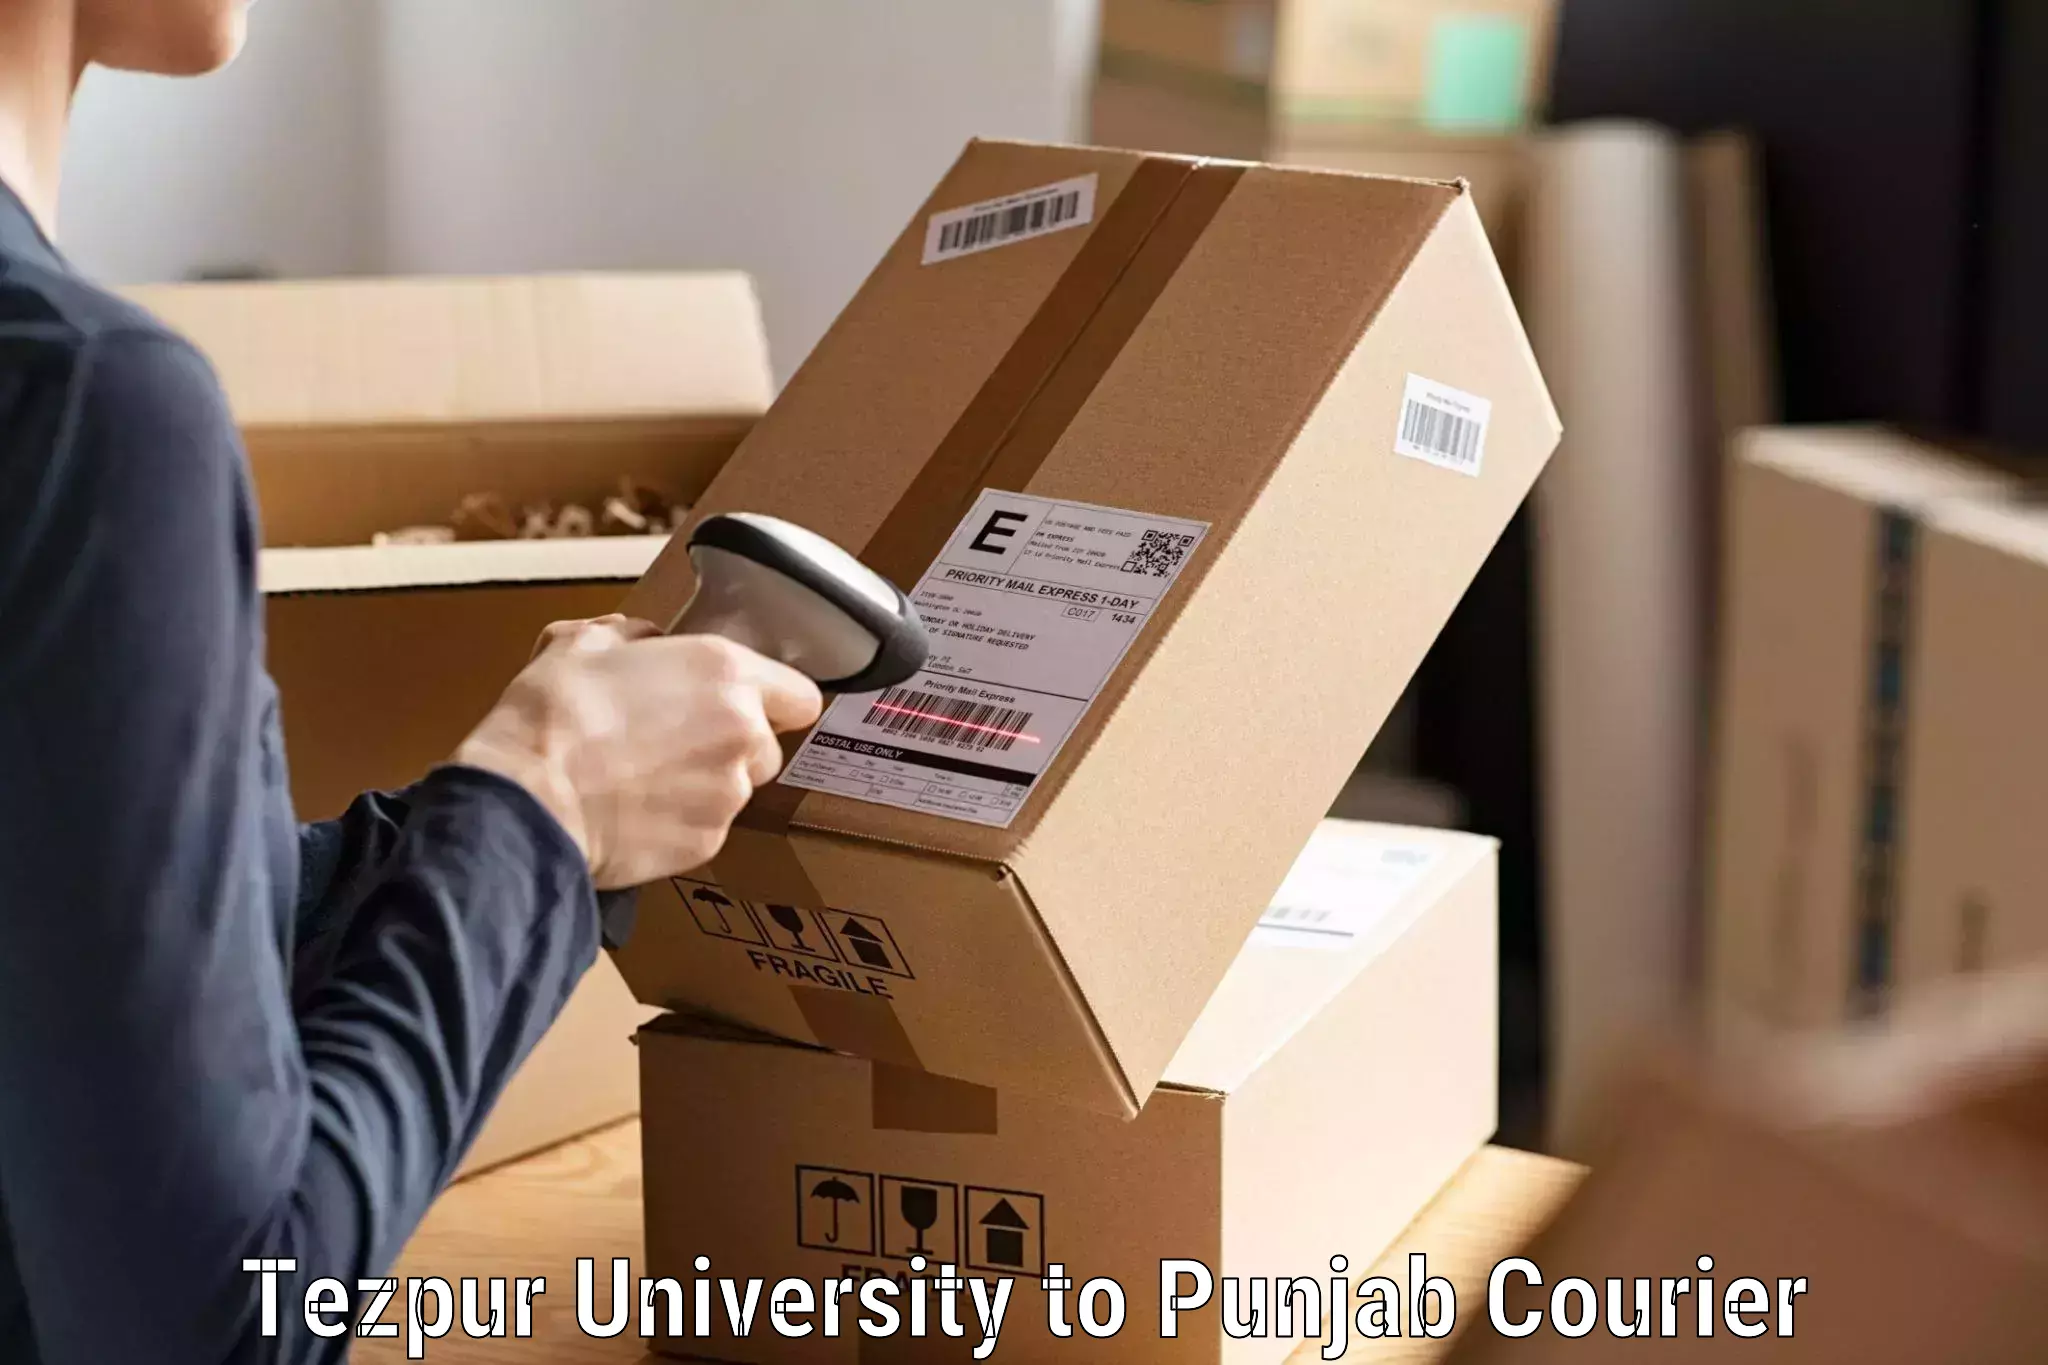 Logistics efficiency in Tezpur University to Jalandhar